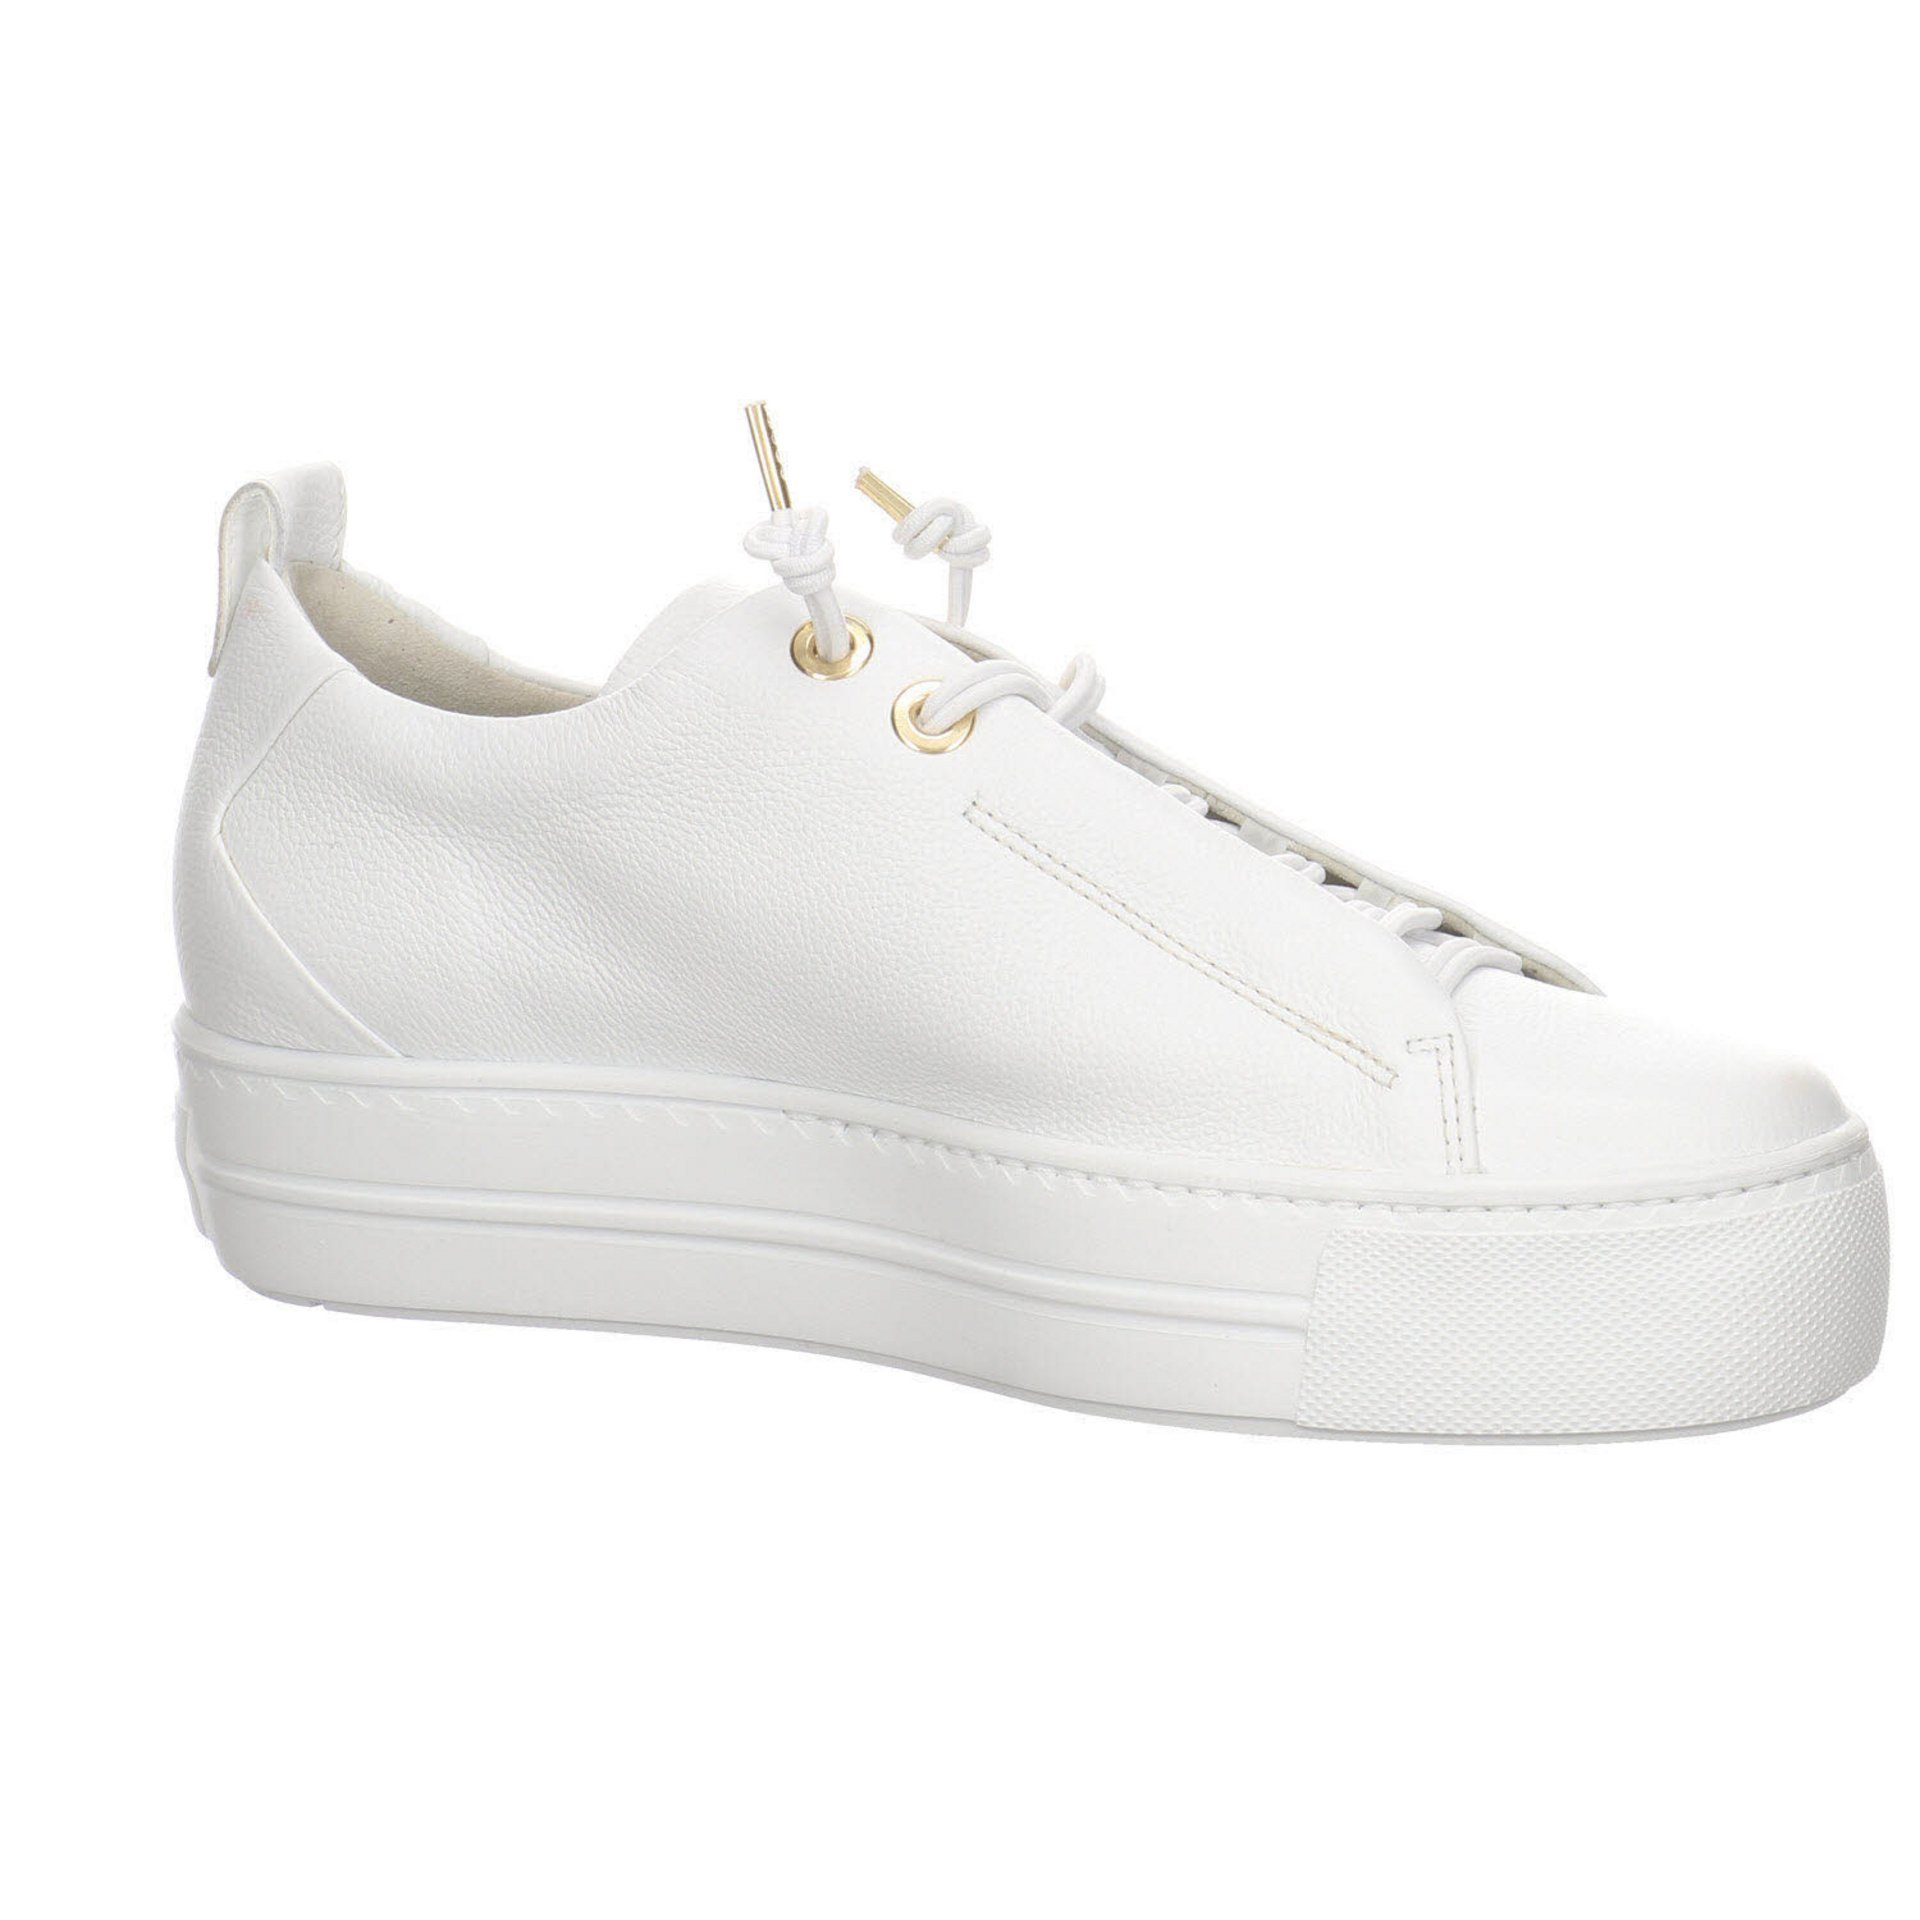 Paul Green Damen Sneaker Schuhe white/gold Glattleder Schnürschuh Slip-On Sneaker